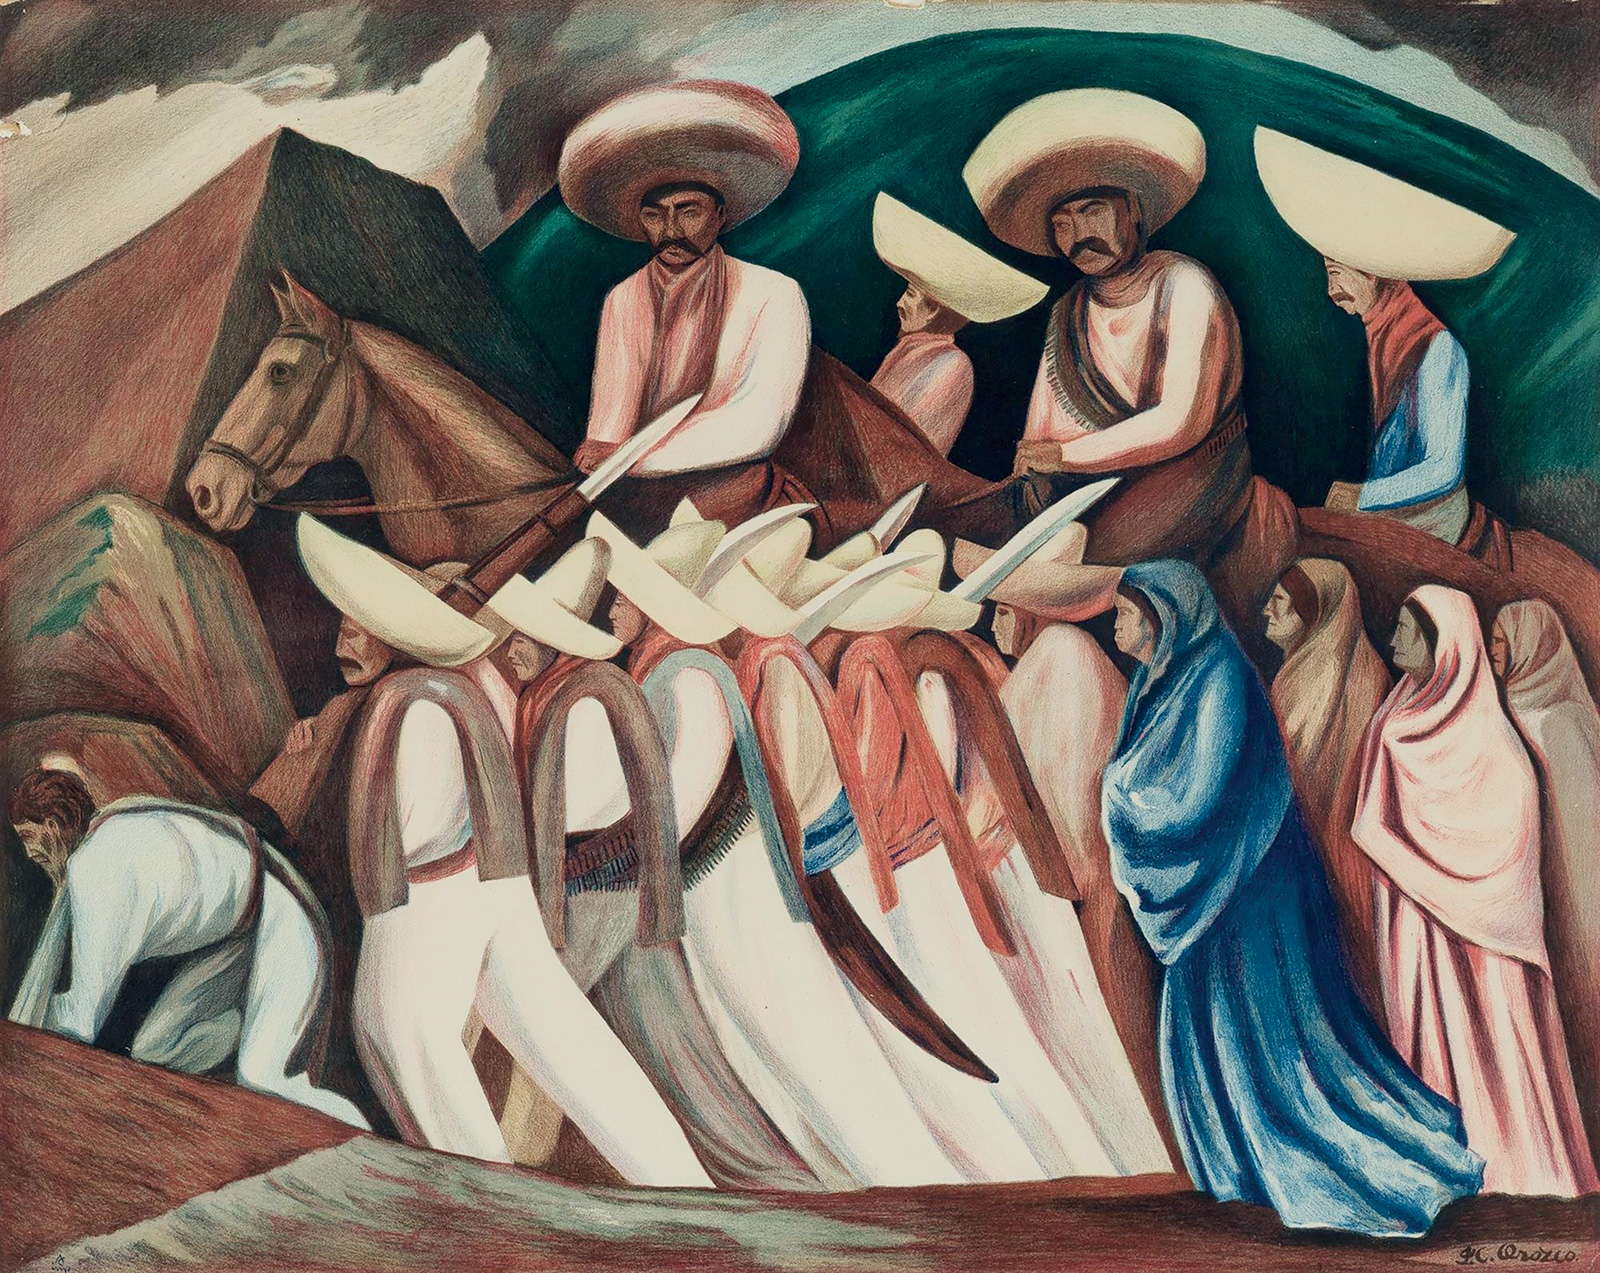 José Clemente Orozco, *Zapatistas*, 1931. Museum of Modern Art 